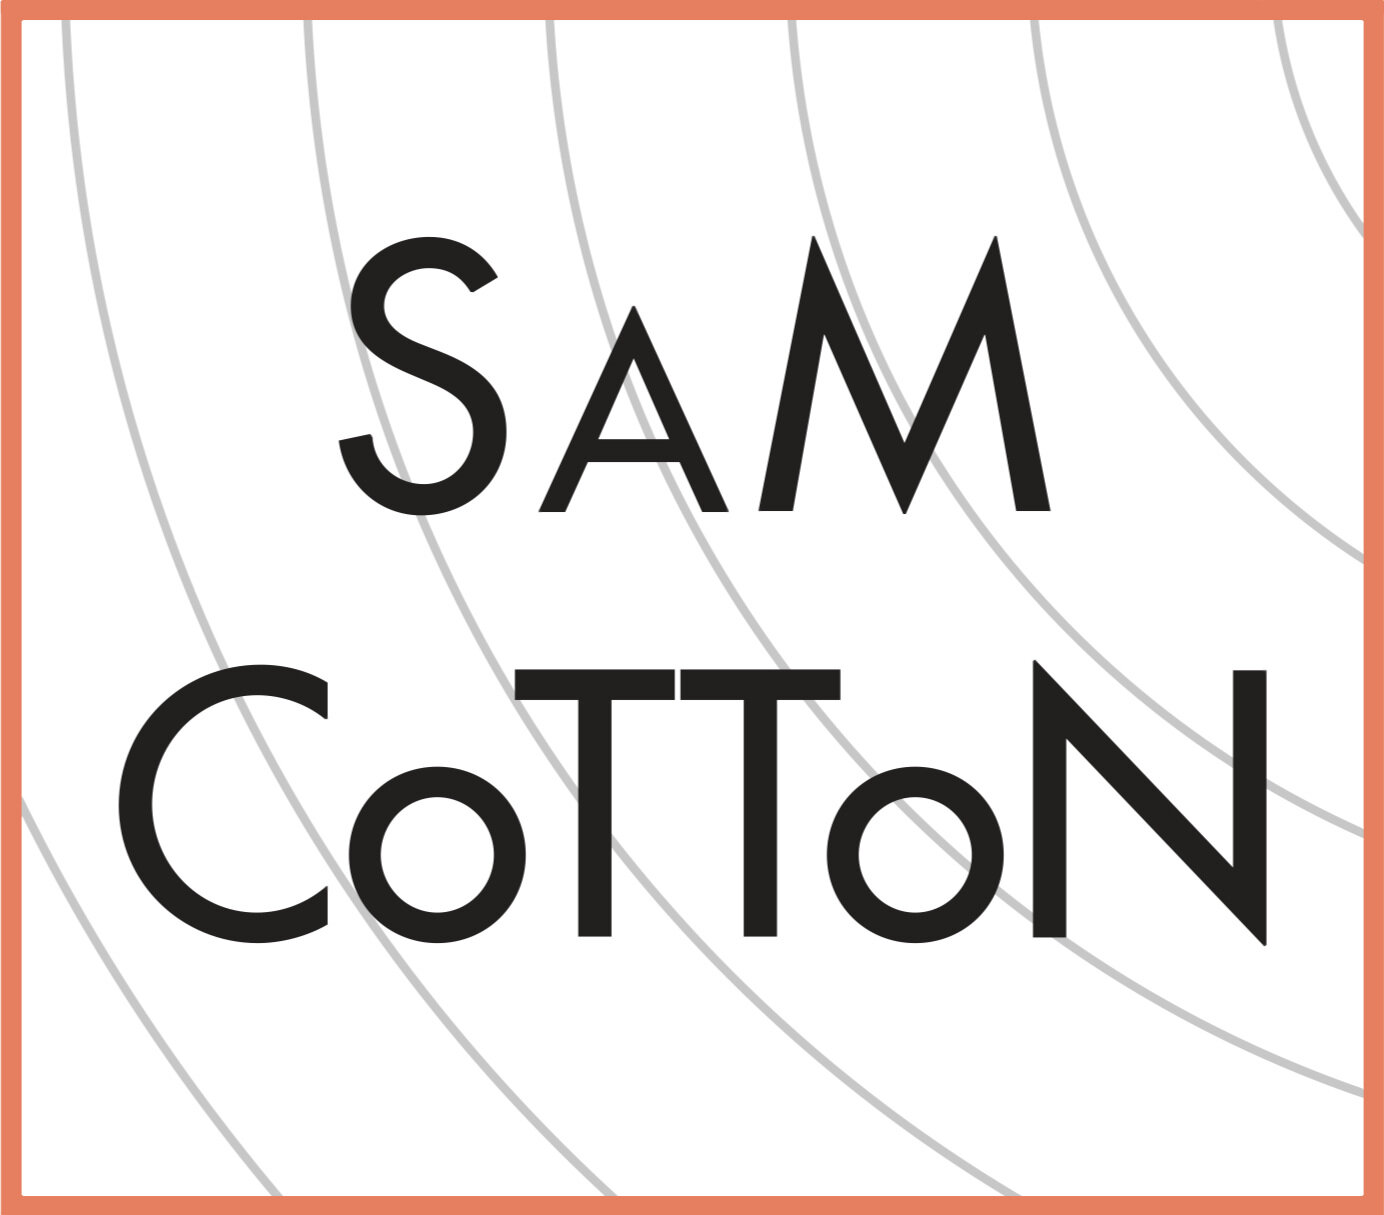 Sam Cotton